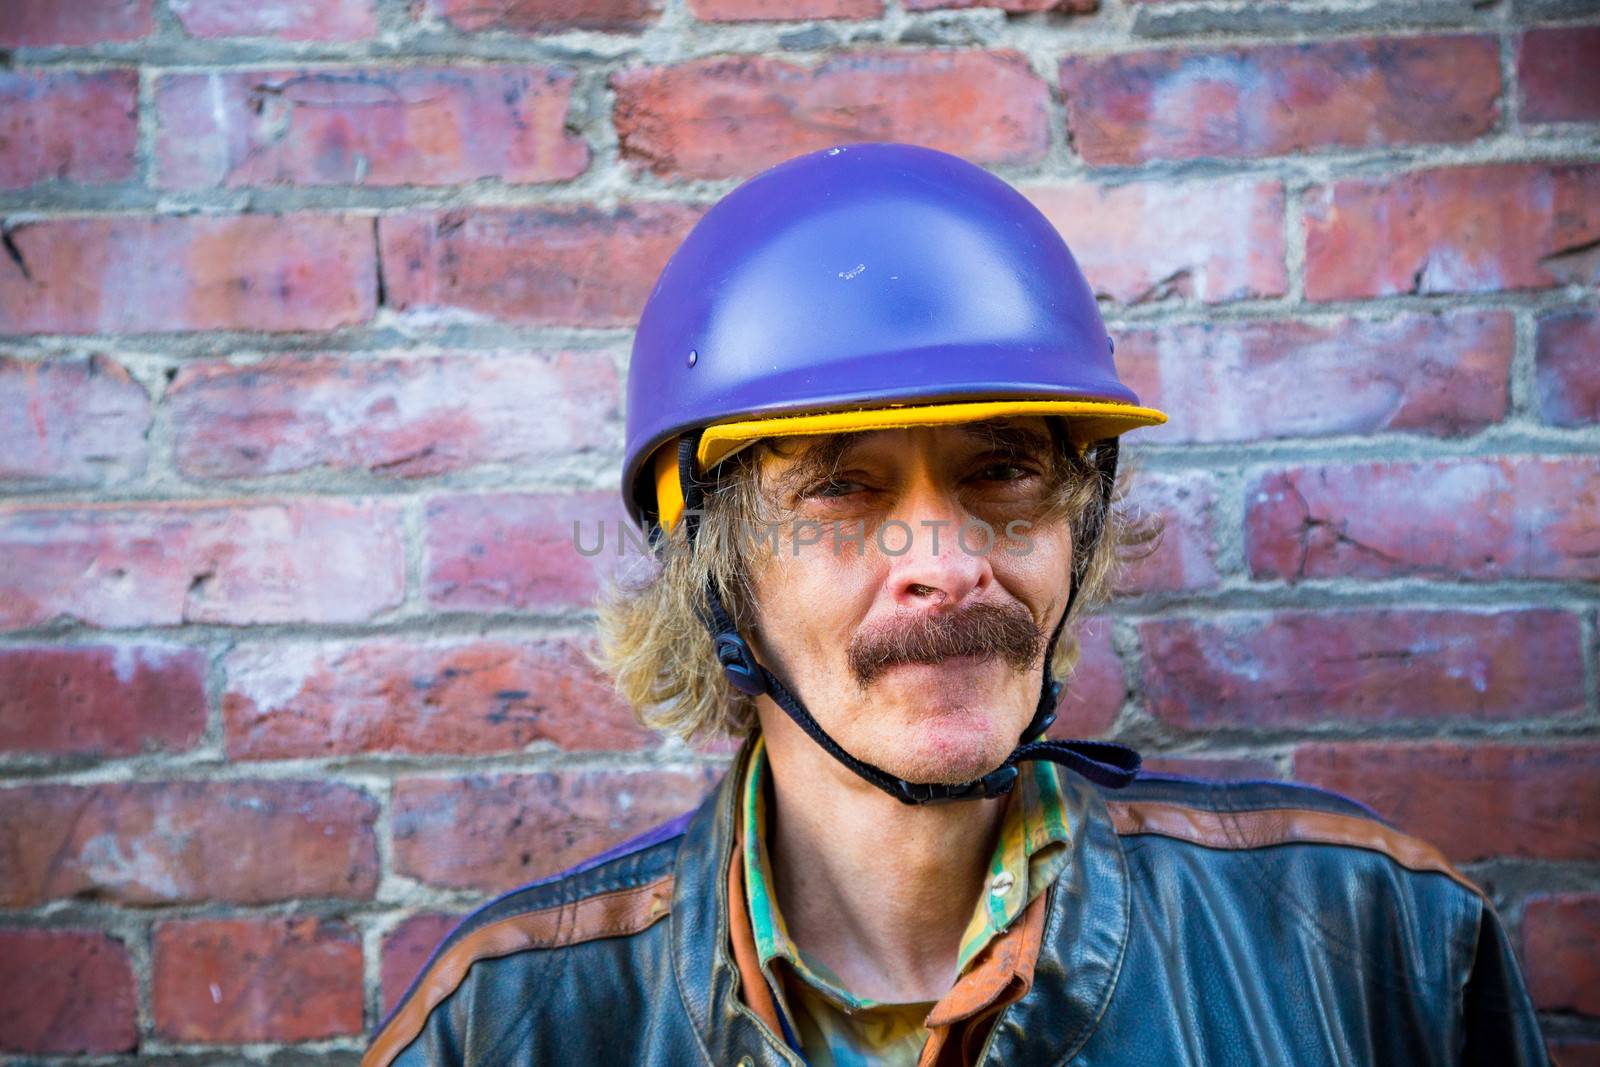 Man in Helmet by joshuaraineyphotography